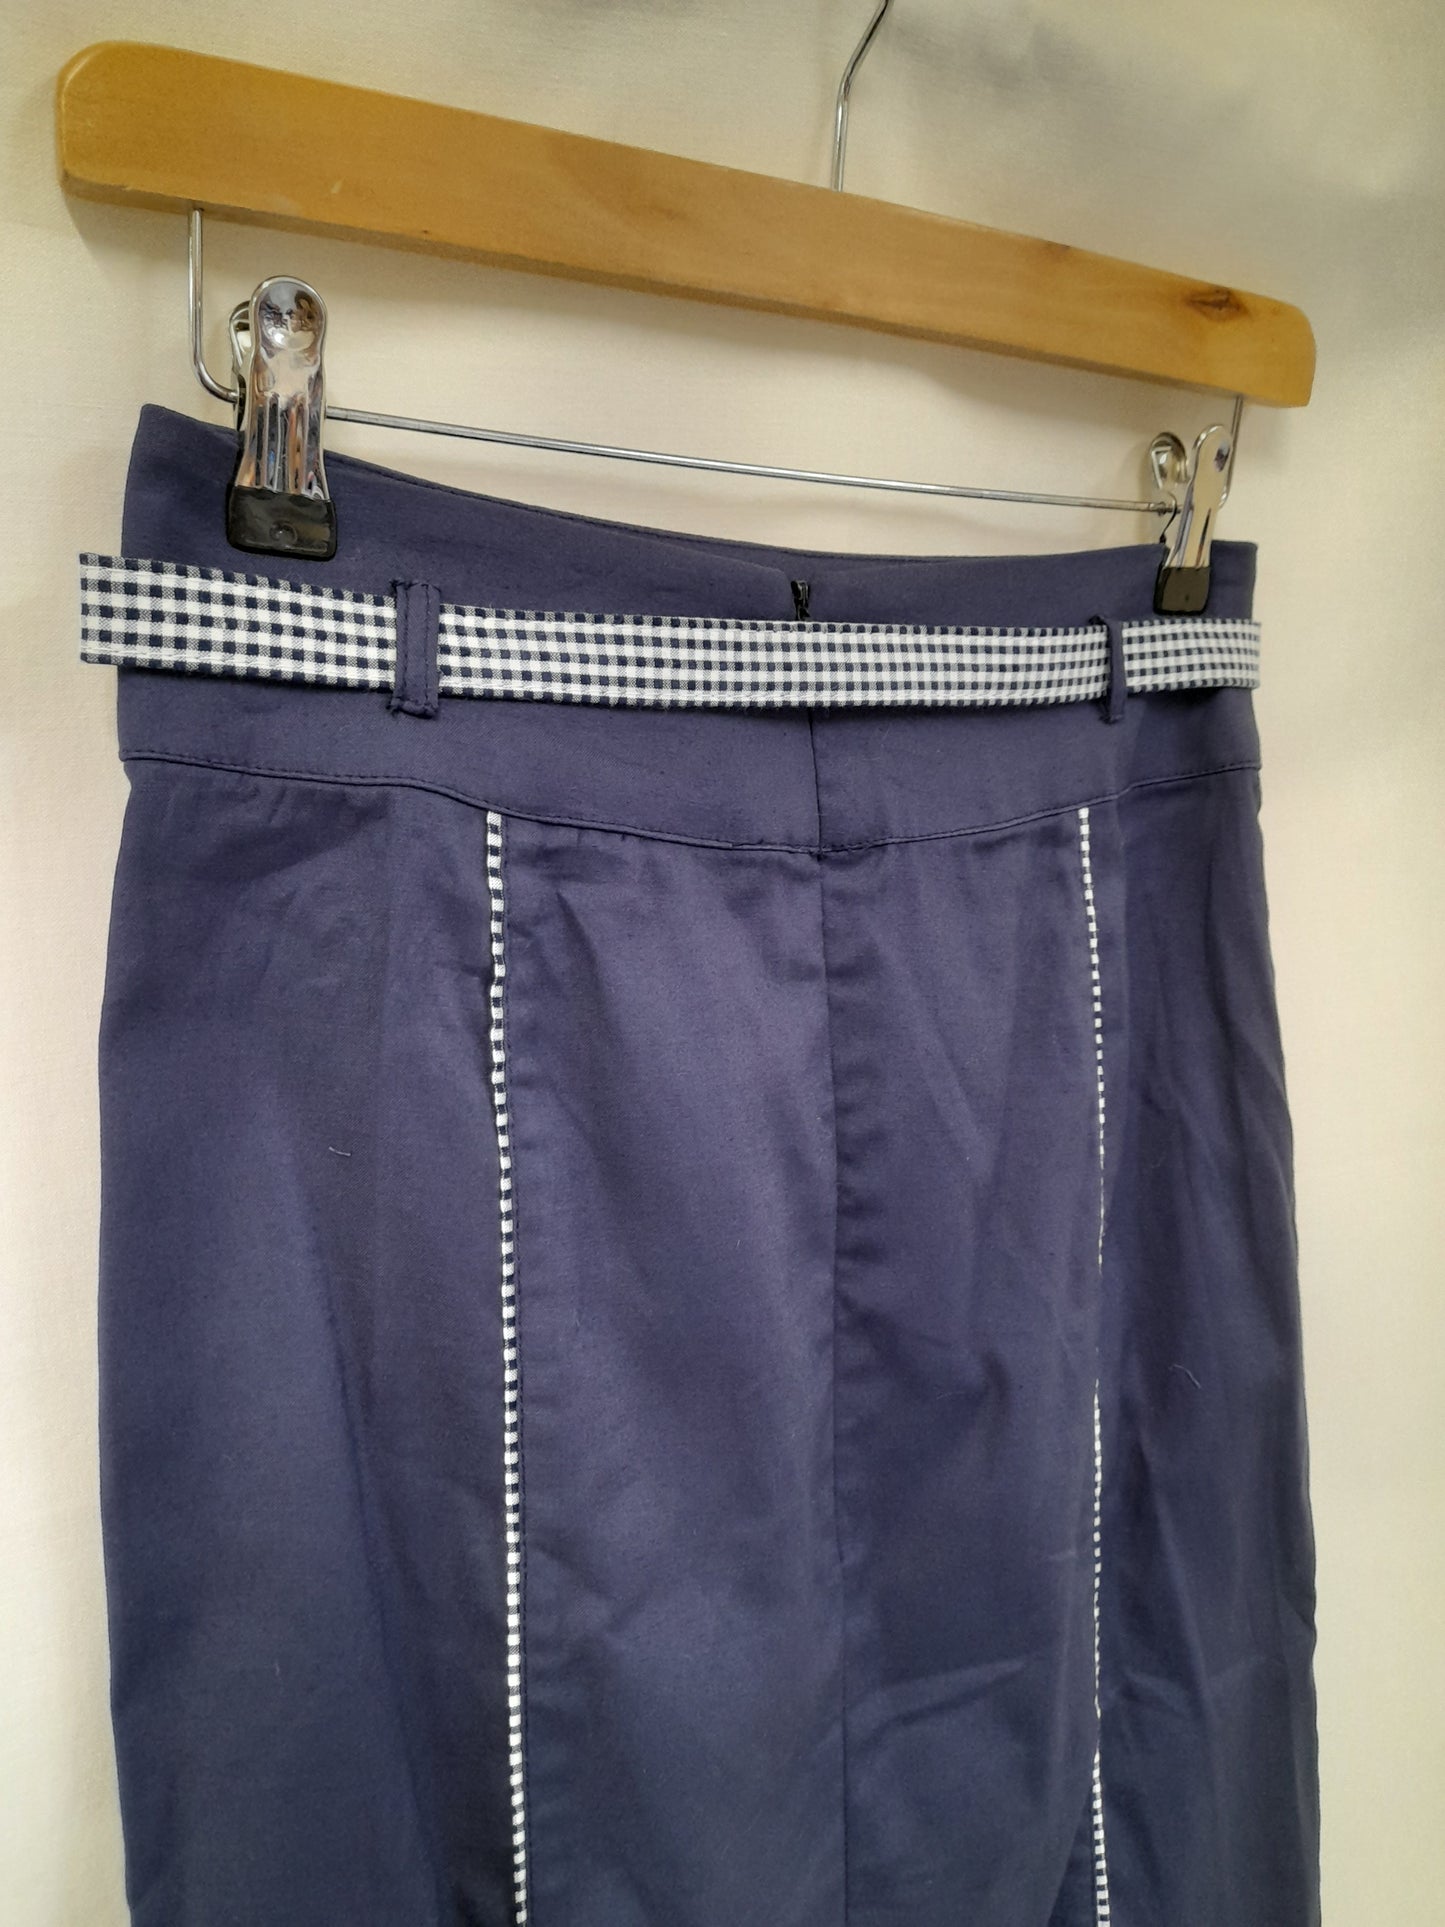 BNWT Retro Navy Gingham Pencil Skirt Size 8